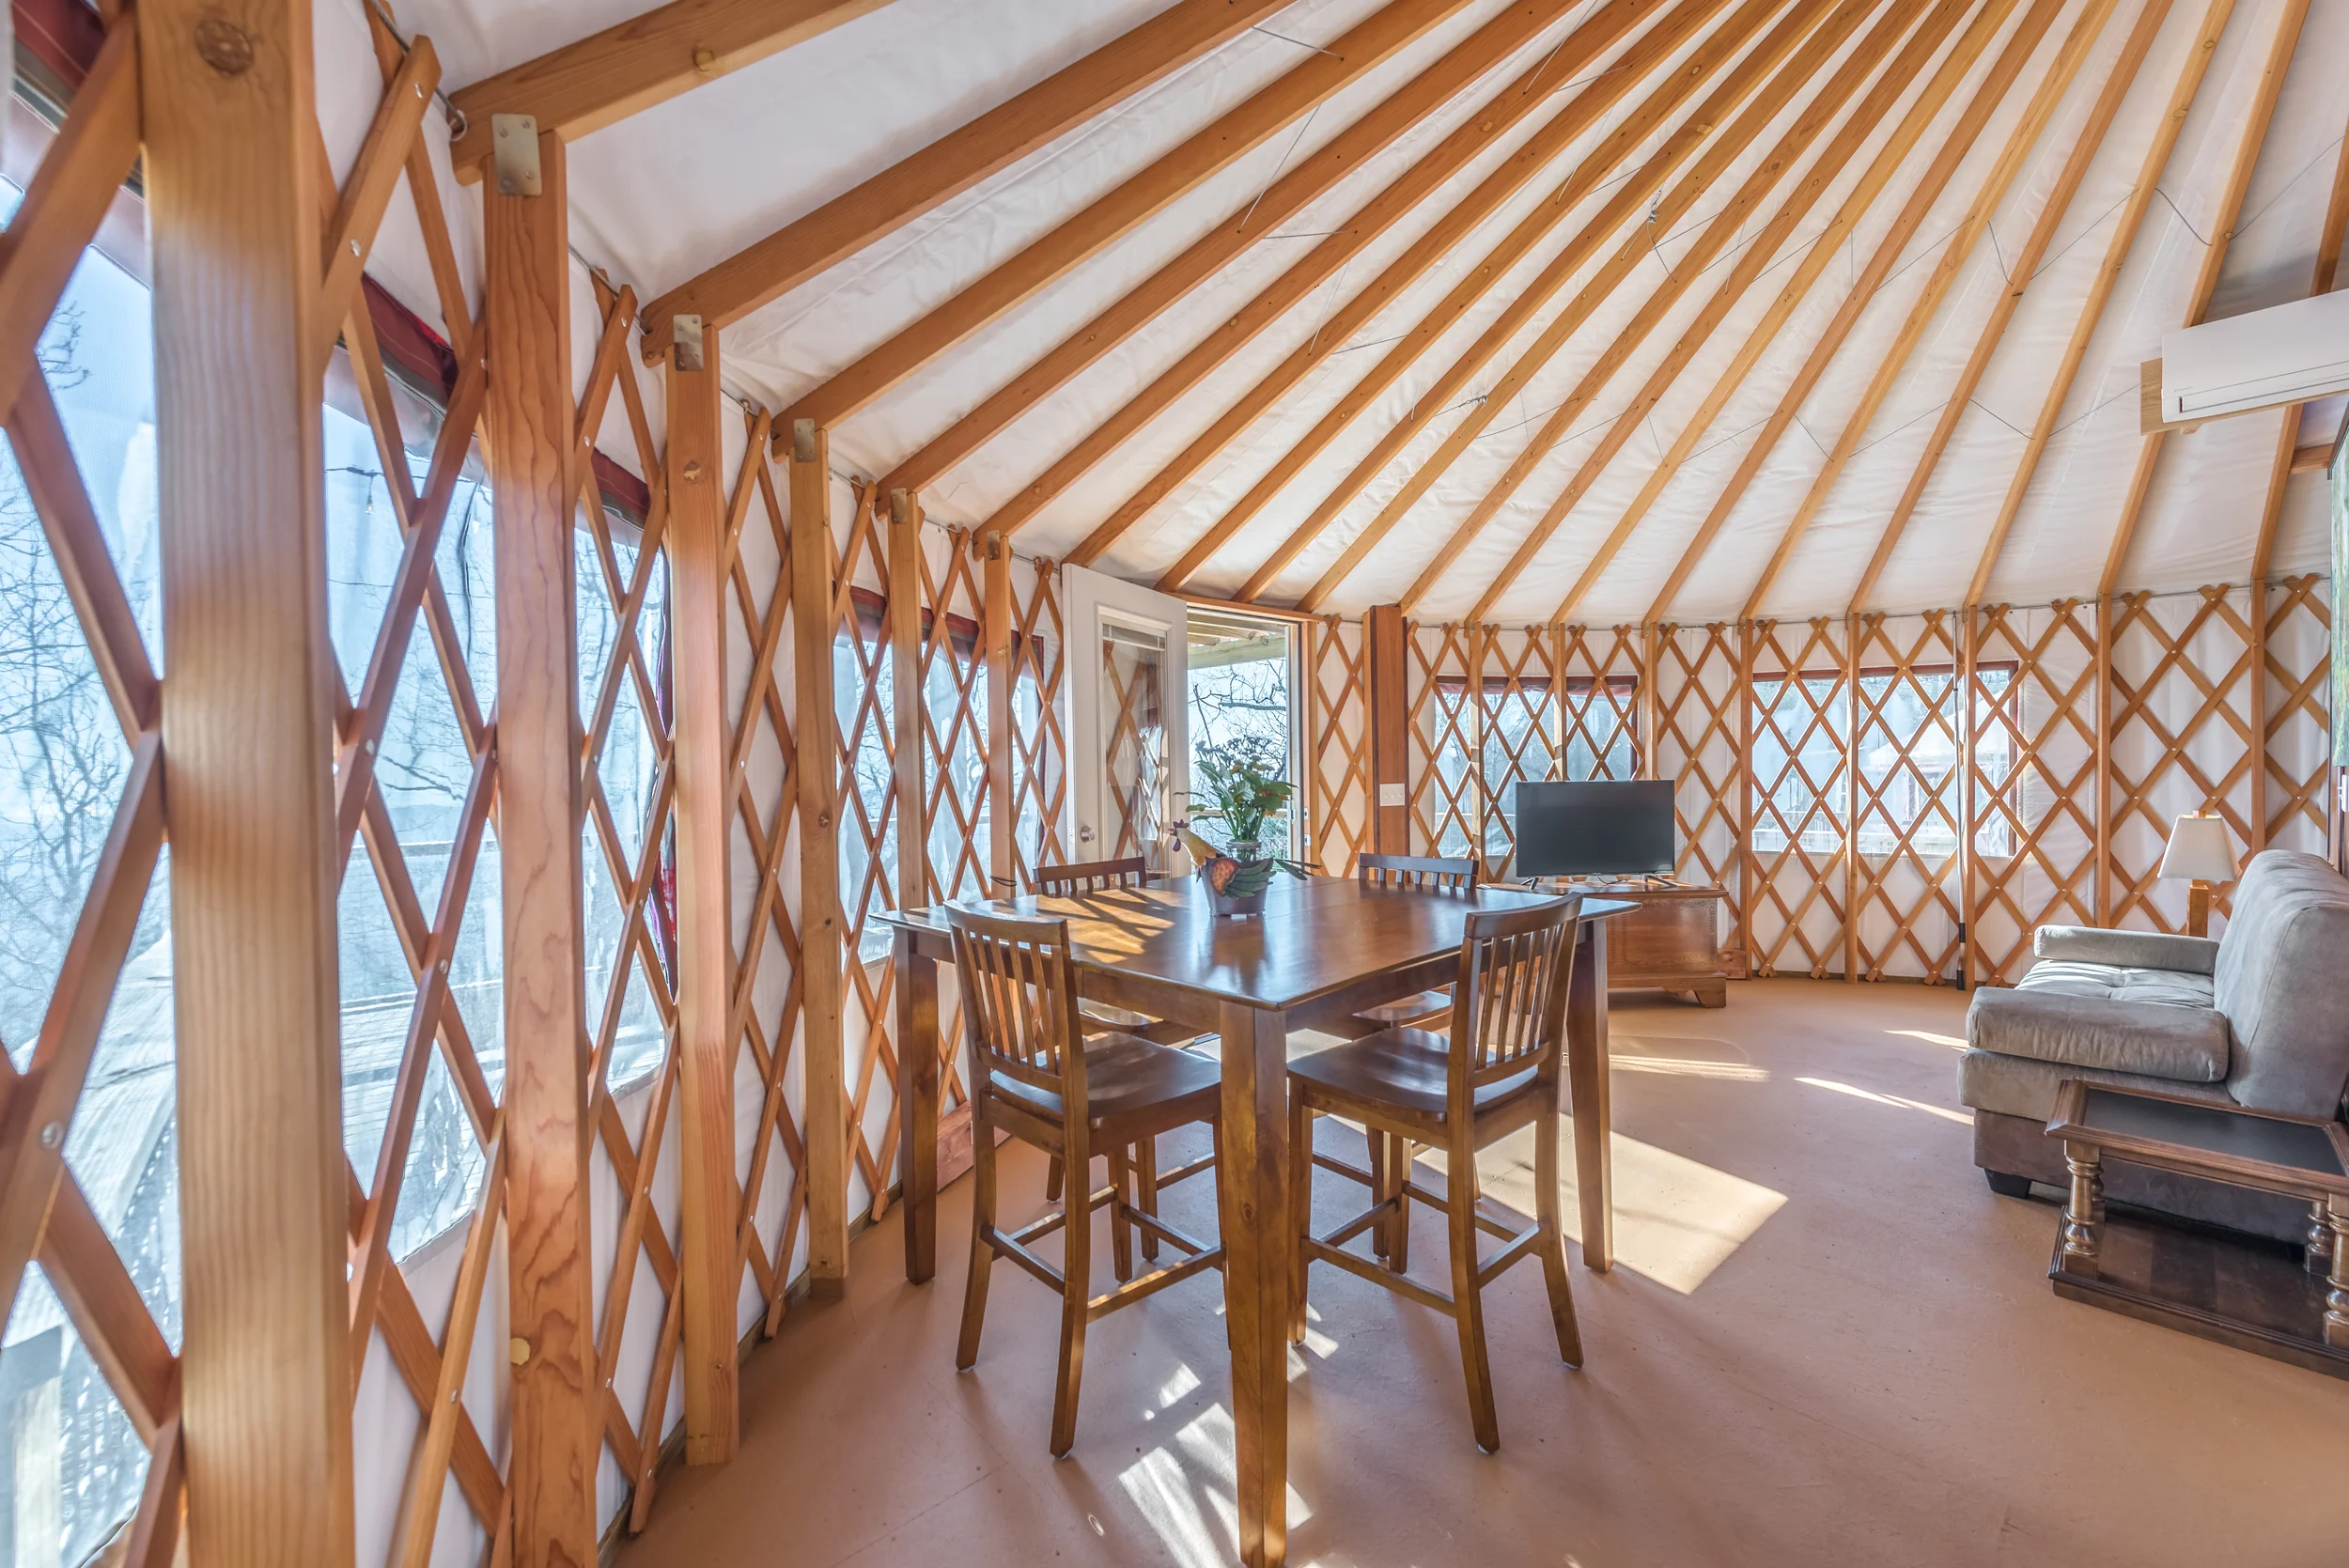 Dining table inside yurt